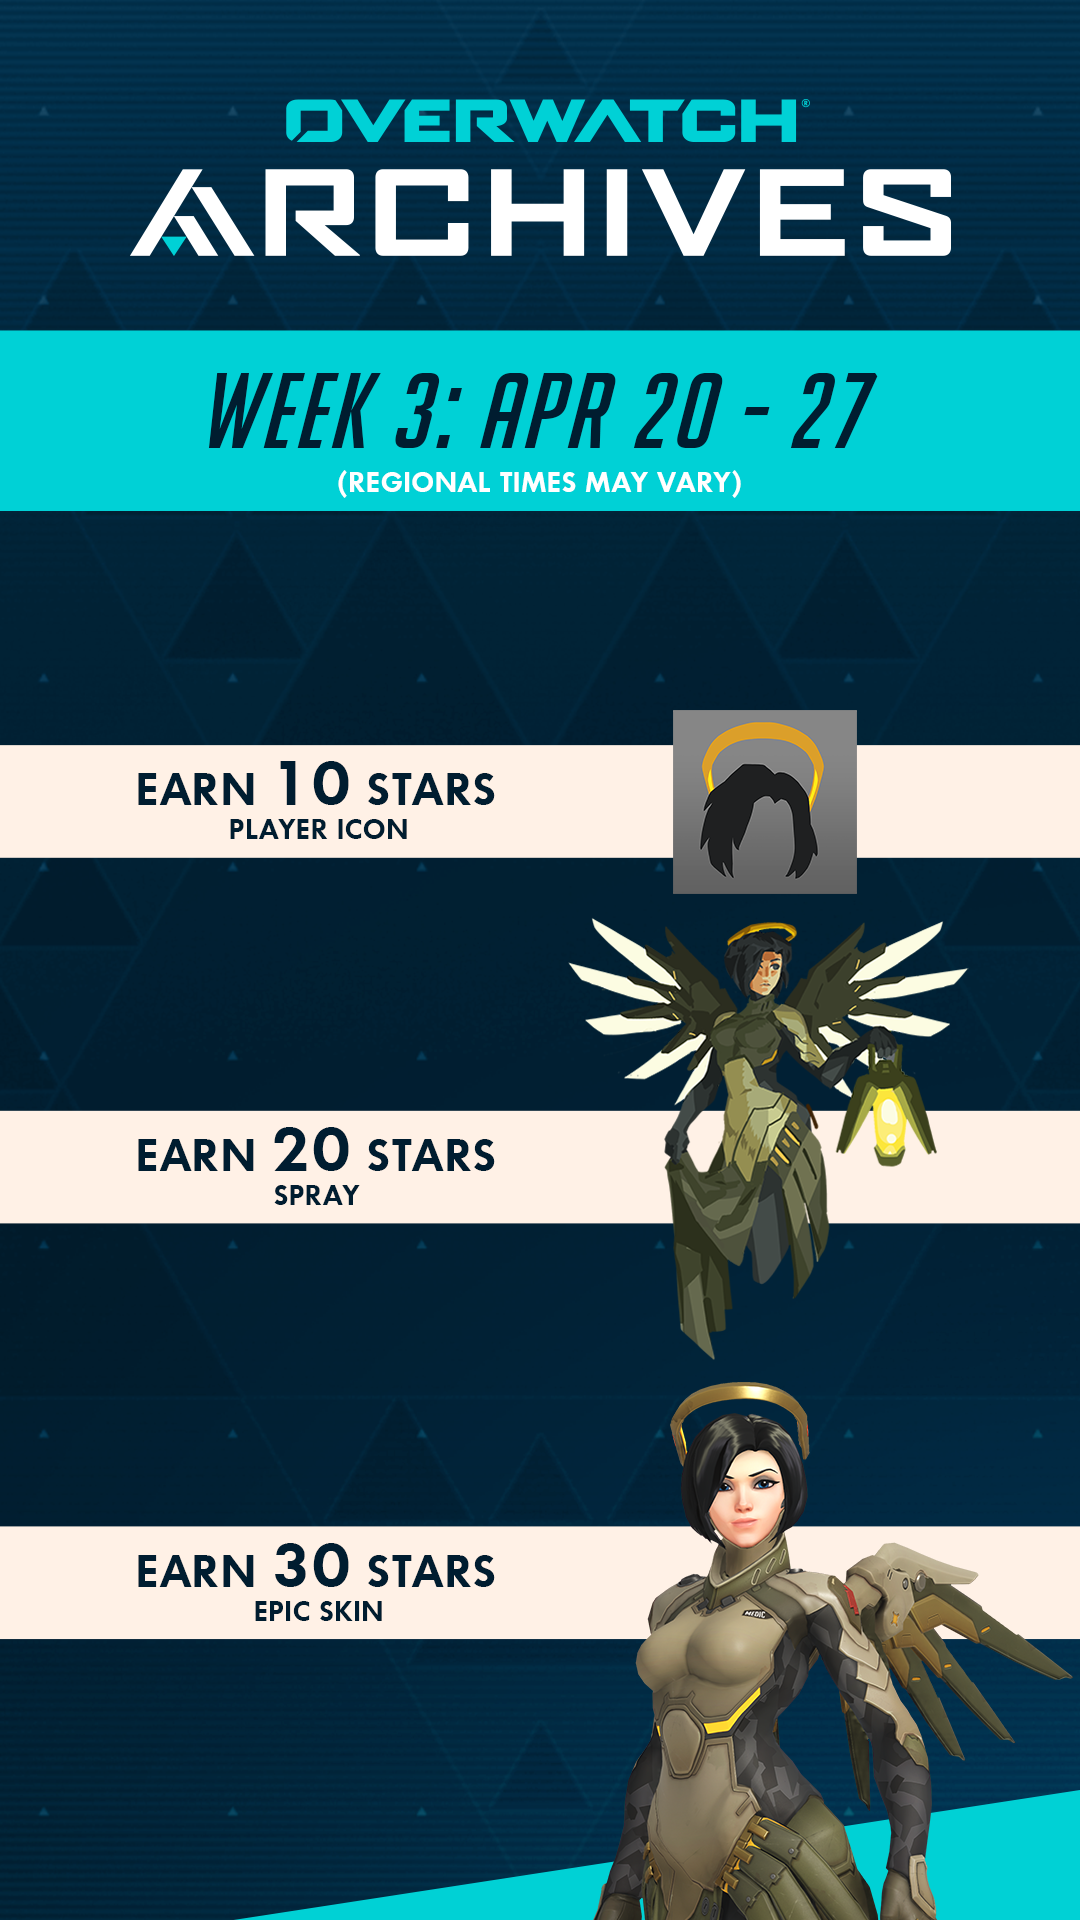 Week 3 Rewards